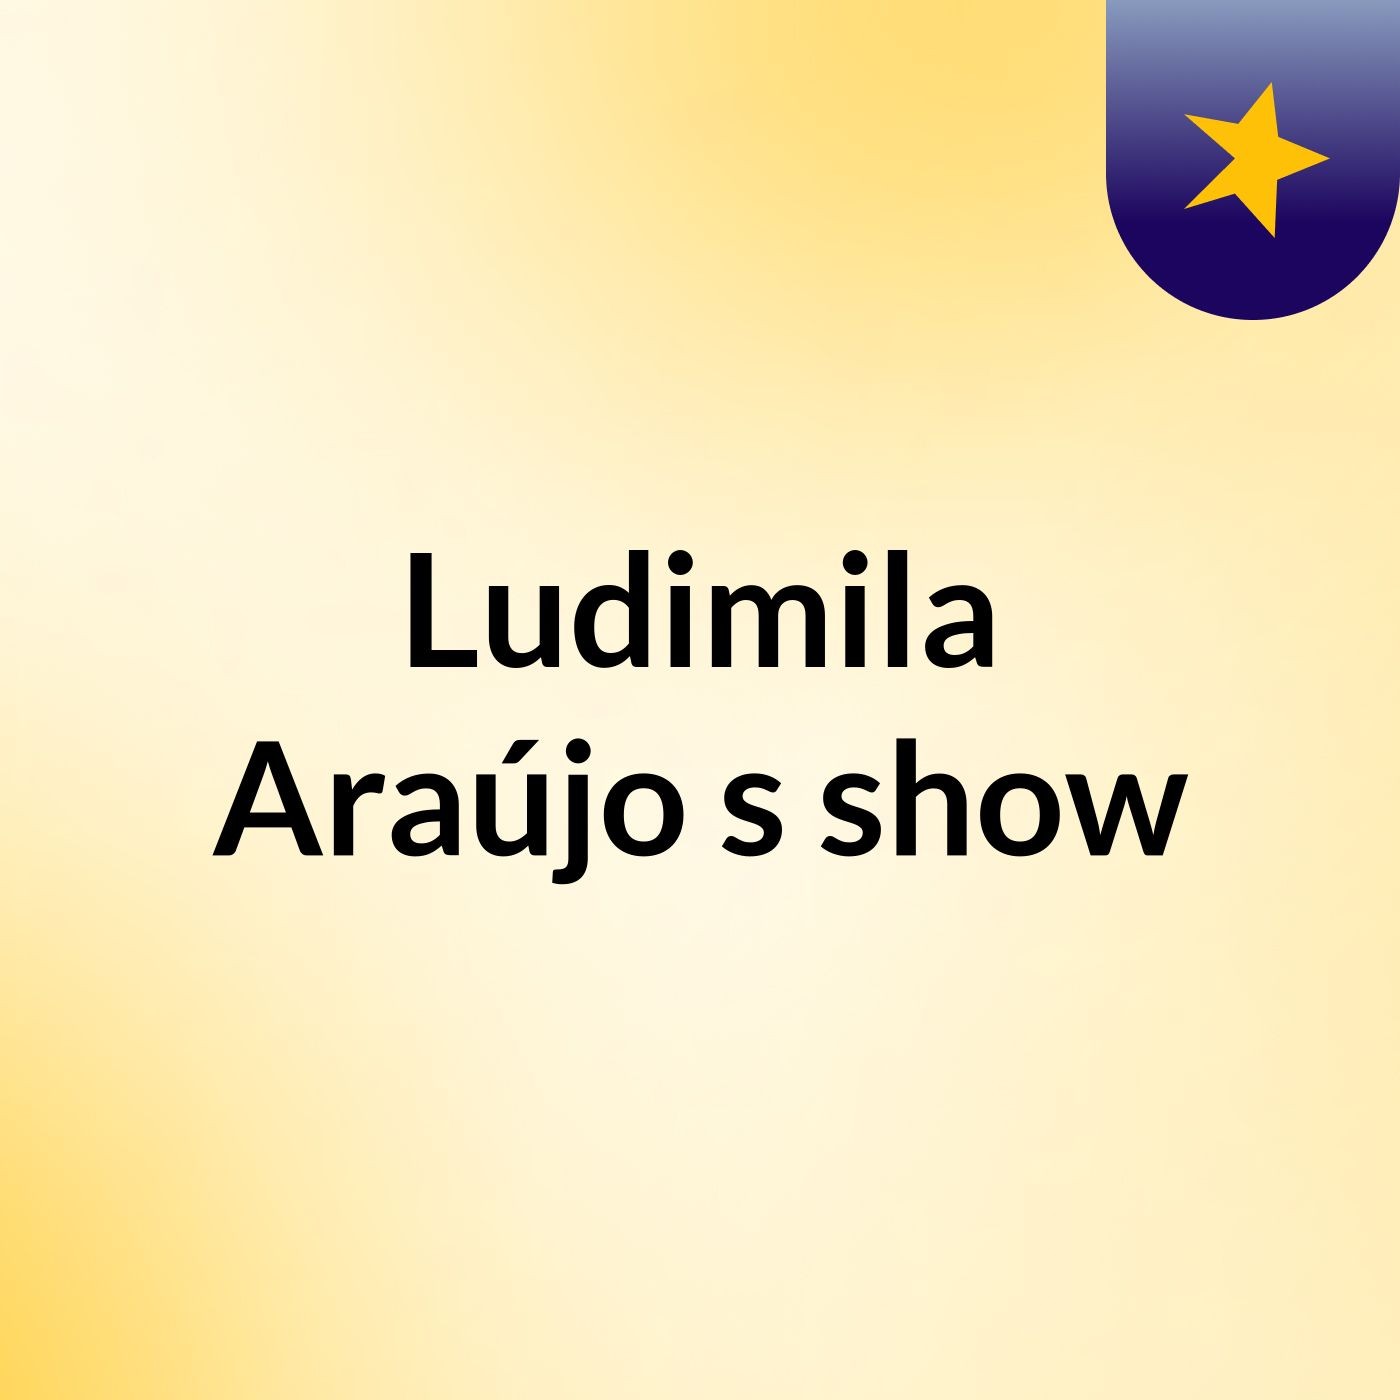 Ludimila Araújo's show